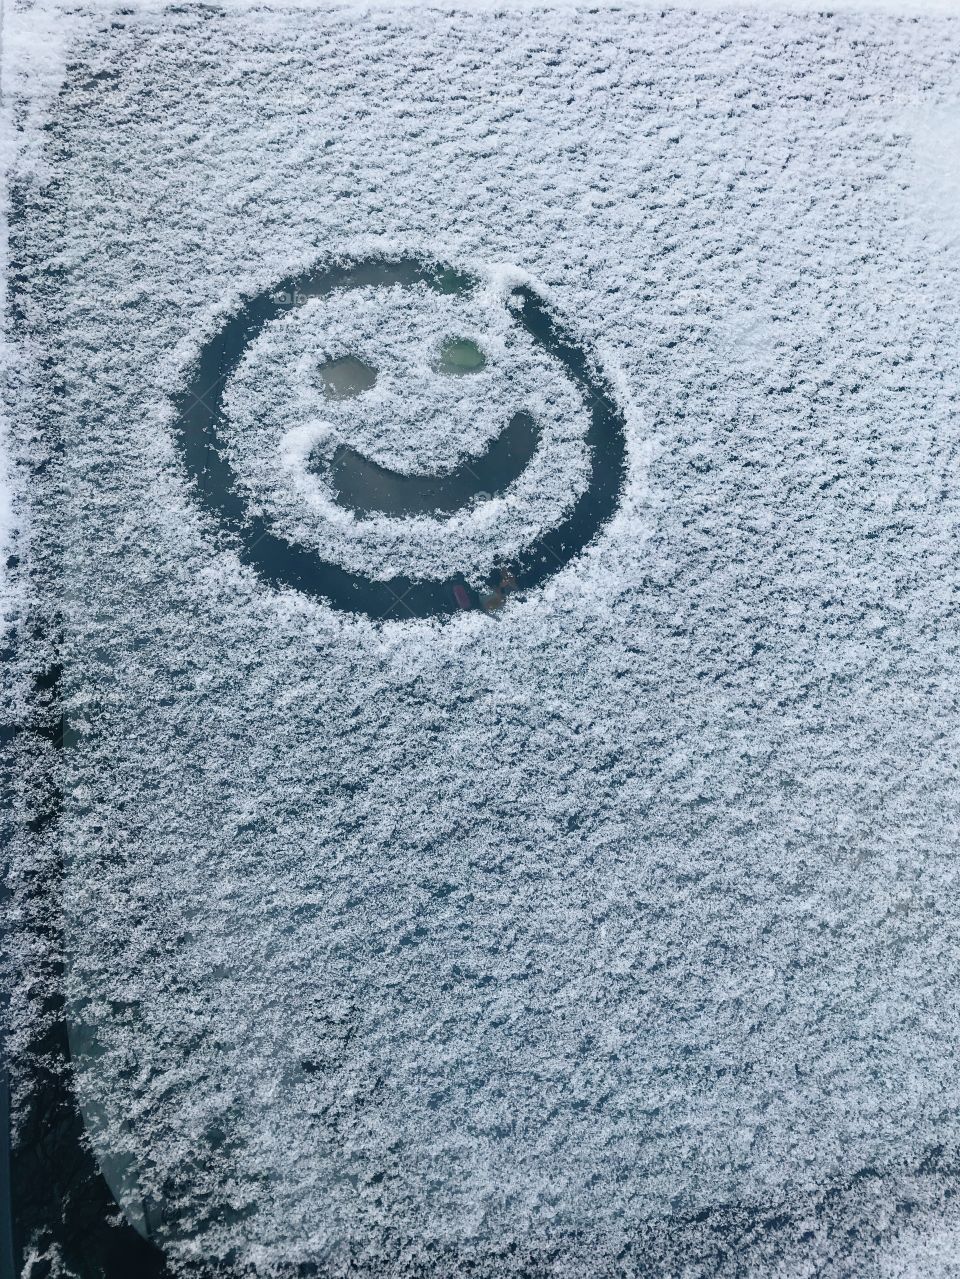 Winter smile